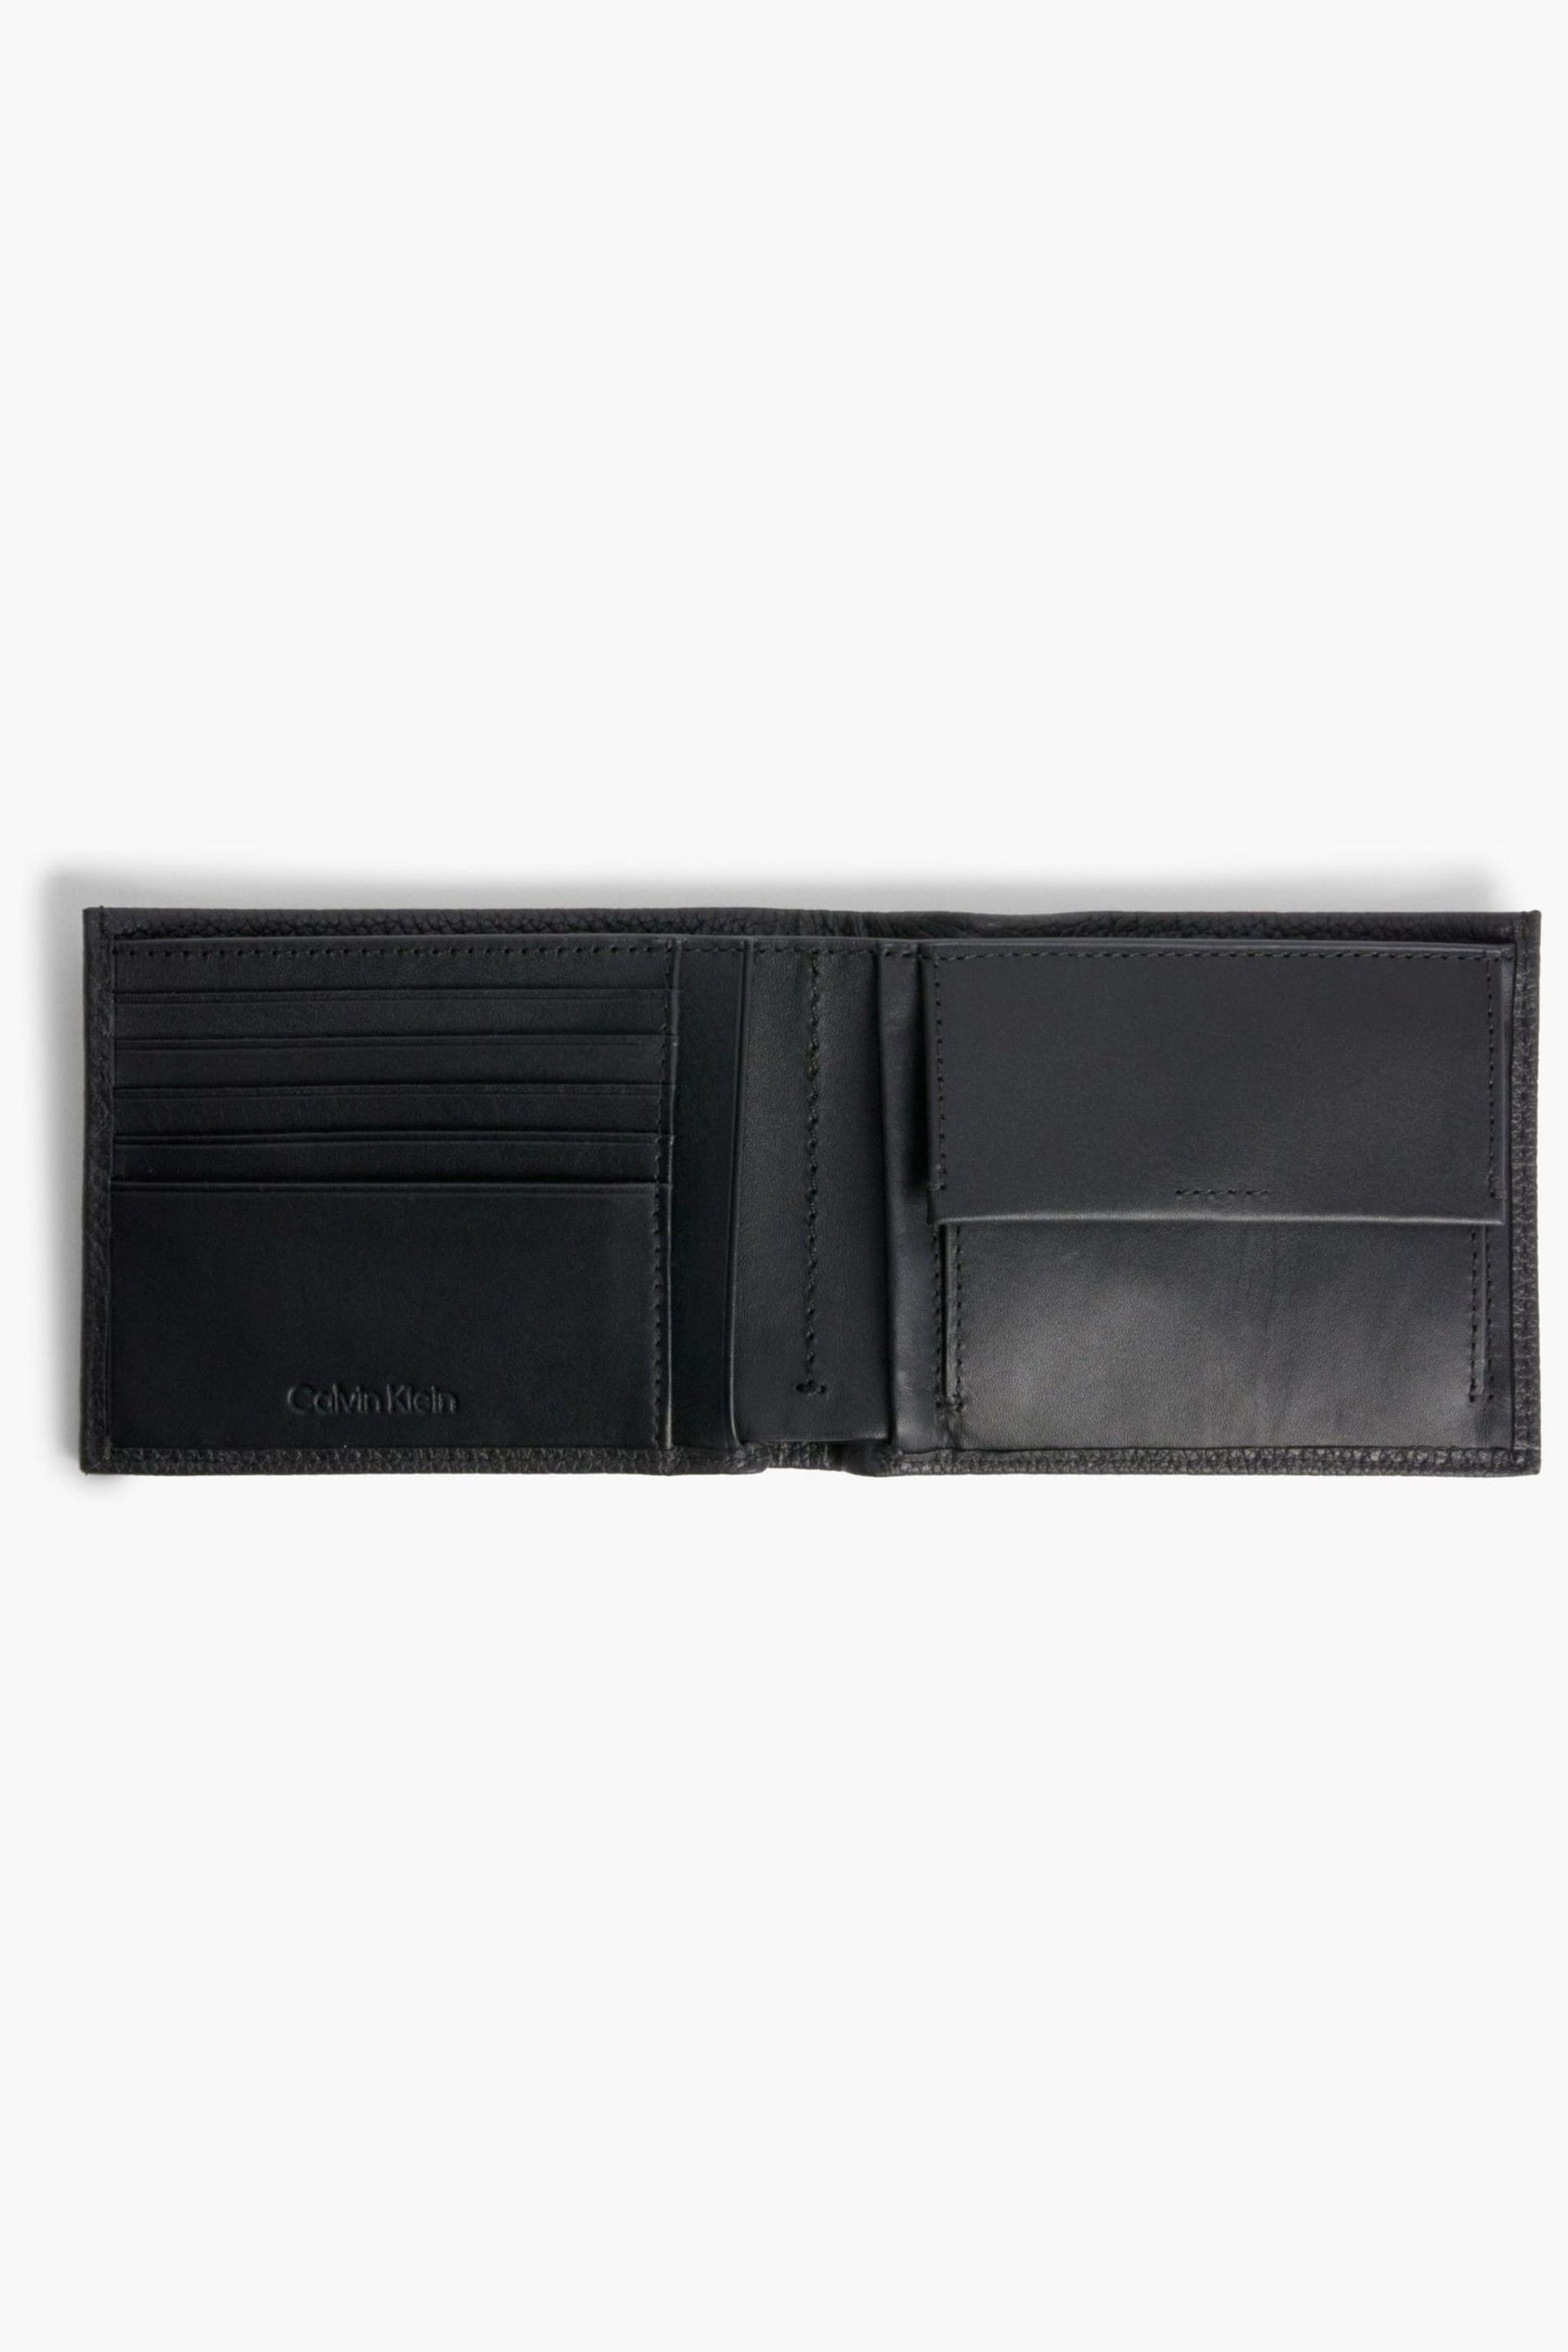 Calvin Klein Black Warmth Leather Bifold Wallet - Image 3 of 3